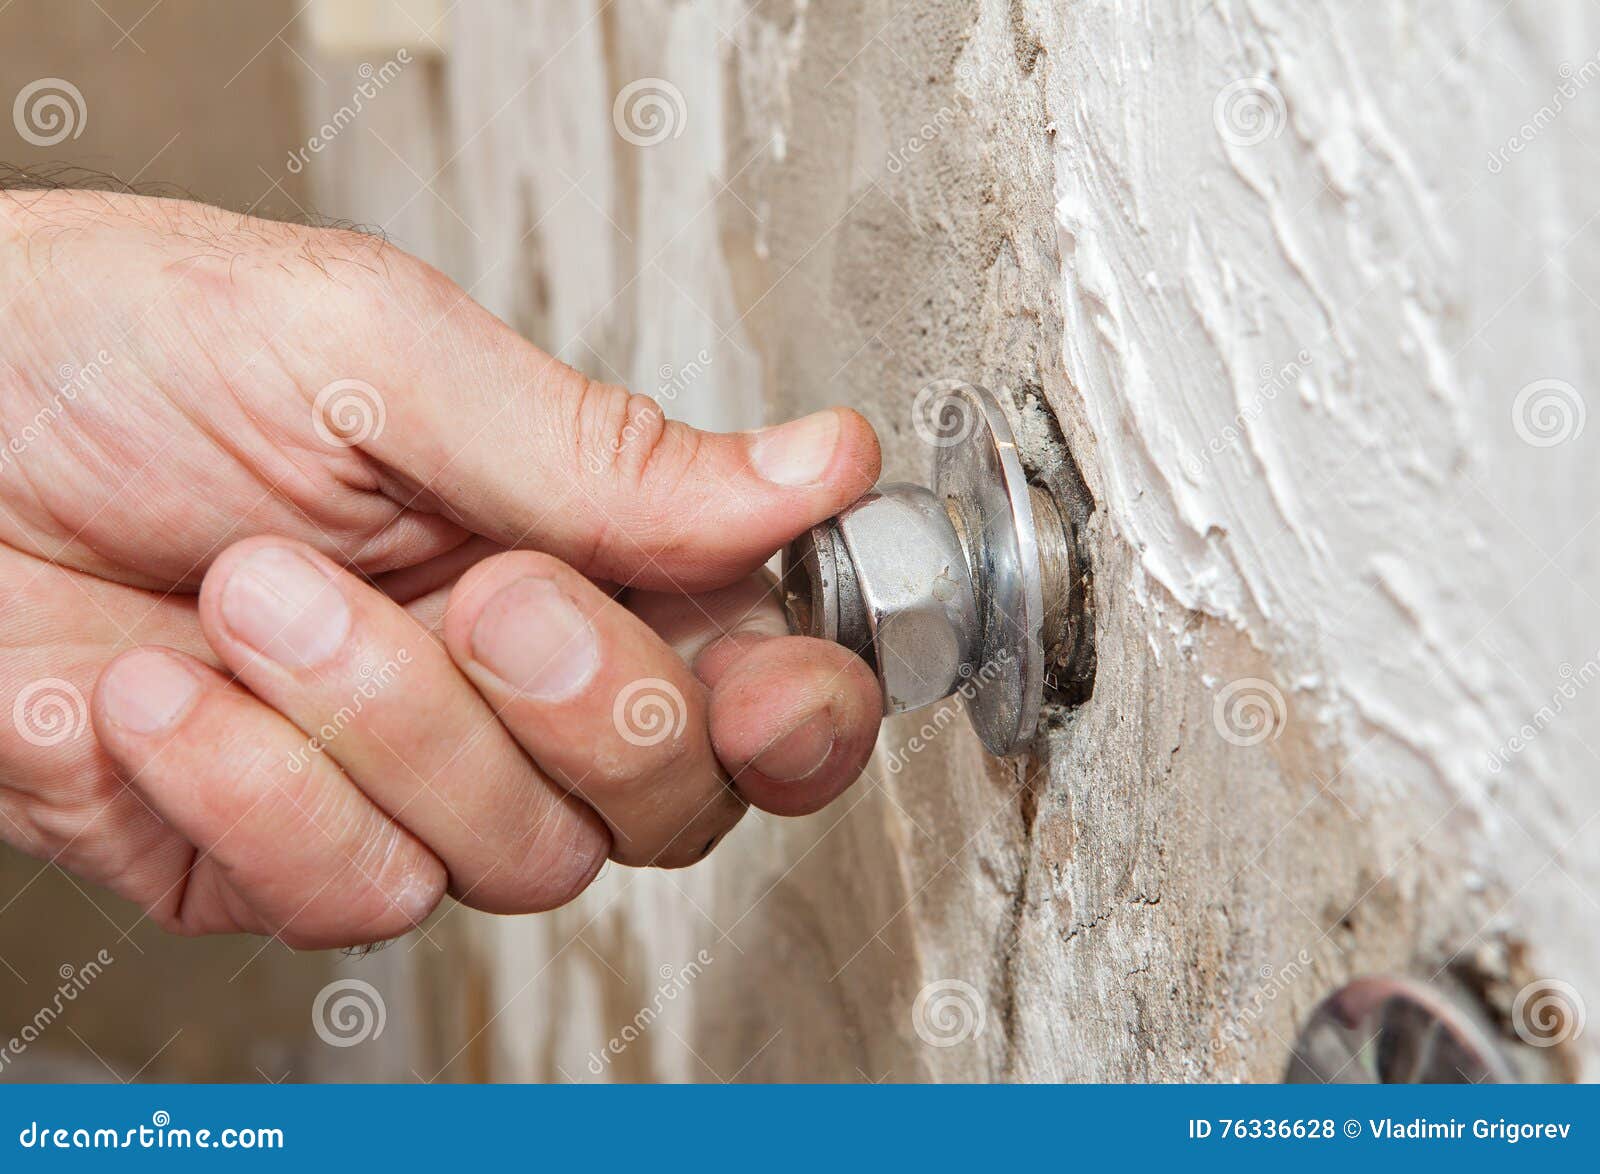 Repair Wall Mount Faucet Close Up Hand Plumber Turns Eccentric